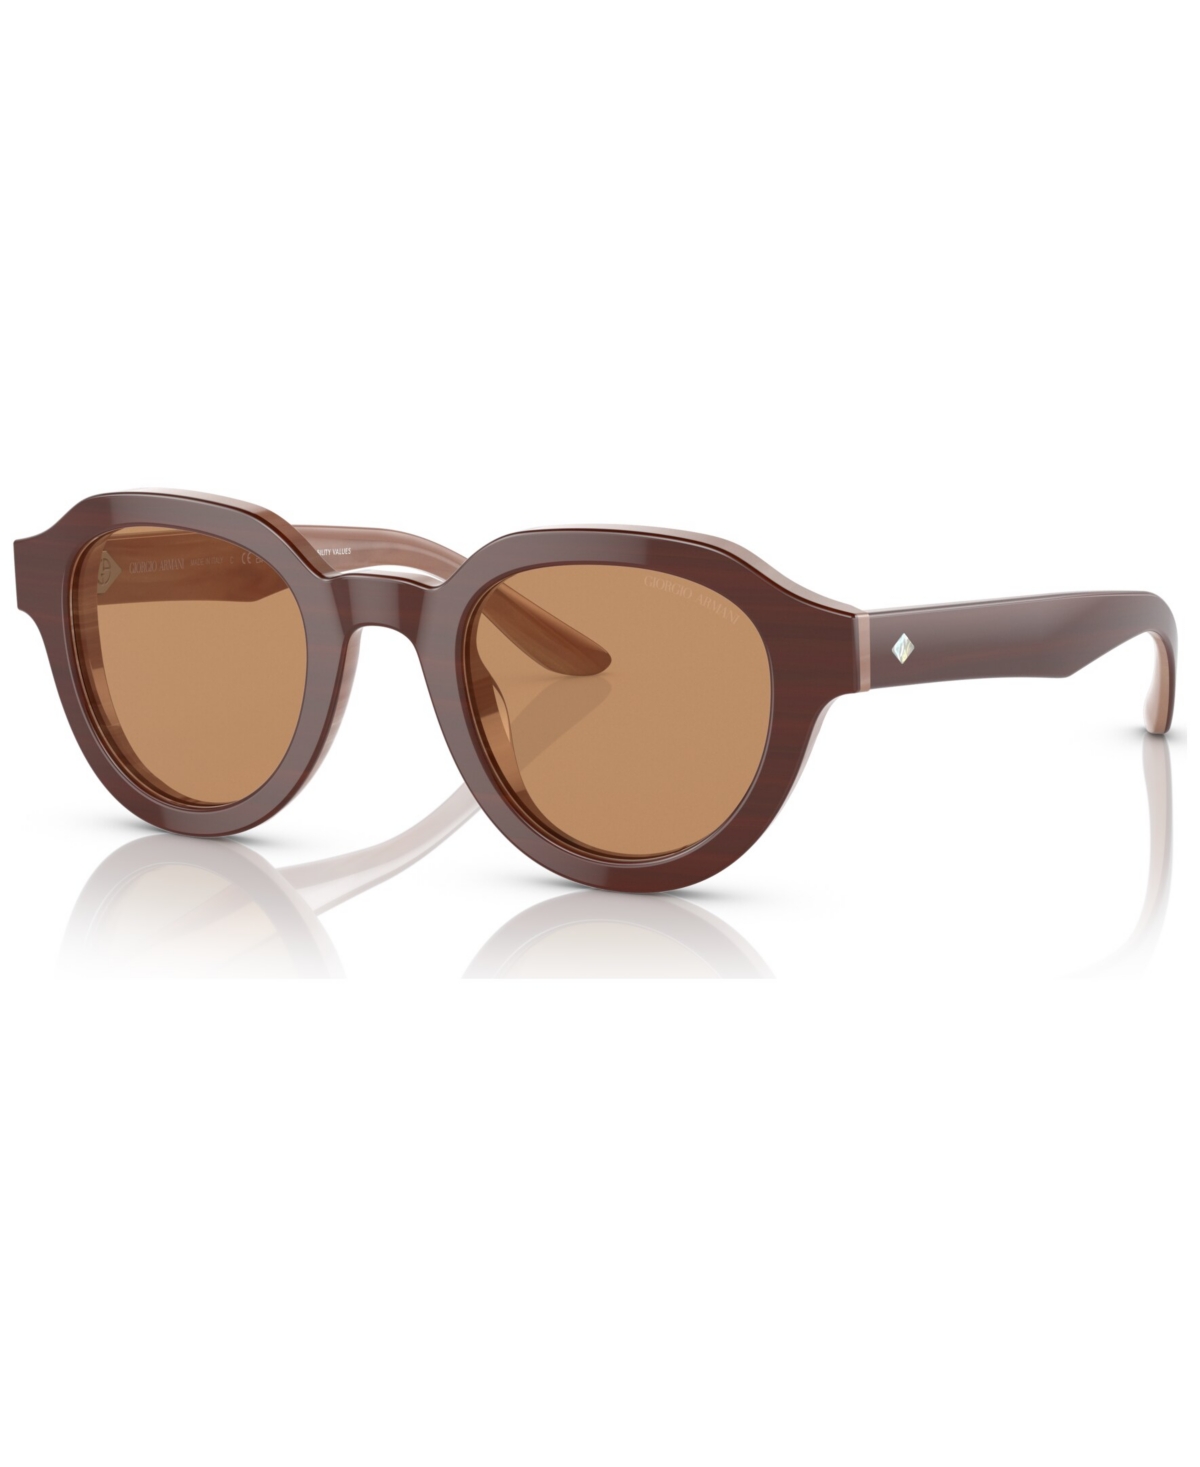 Women's Sunglasses, AR8172U - Bilayer Marble Brown